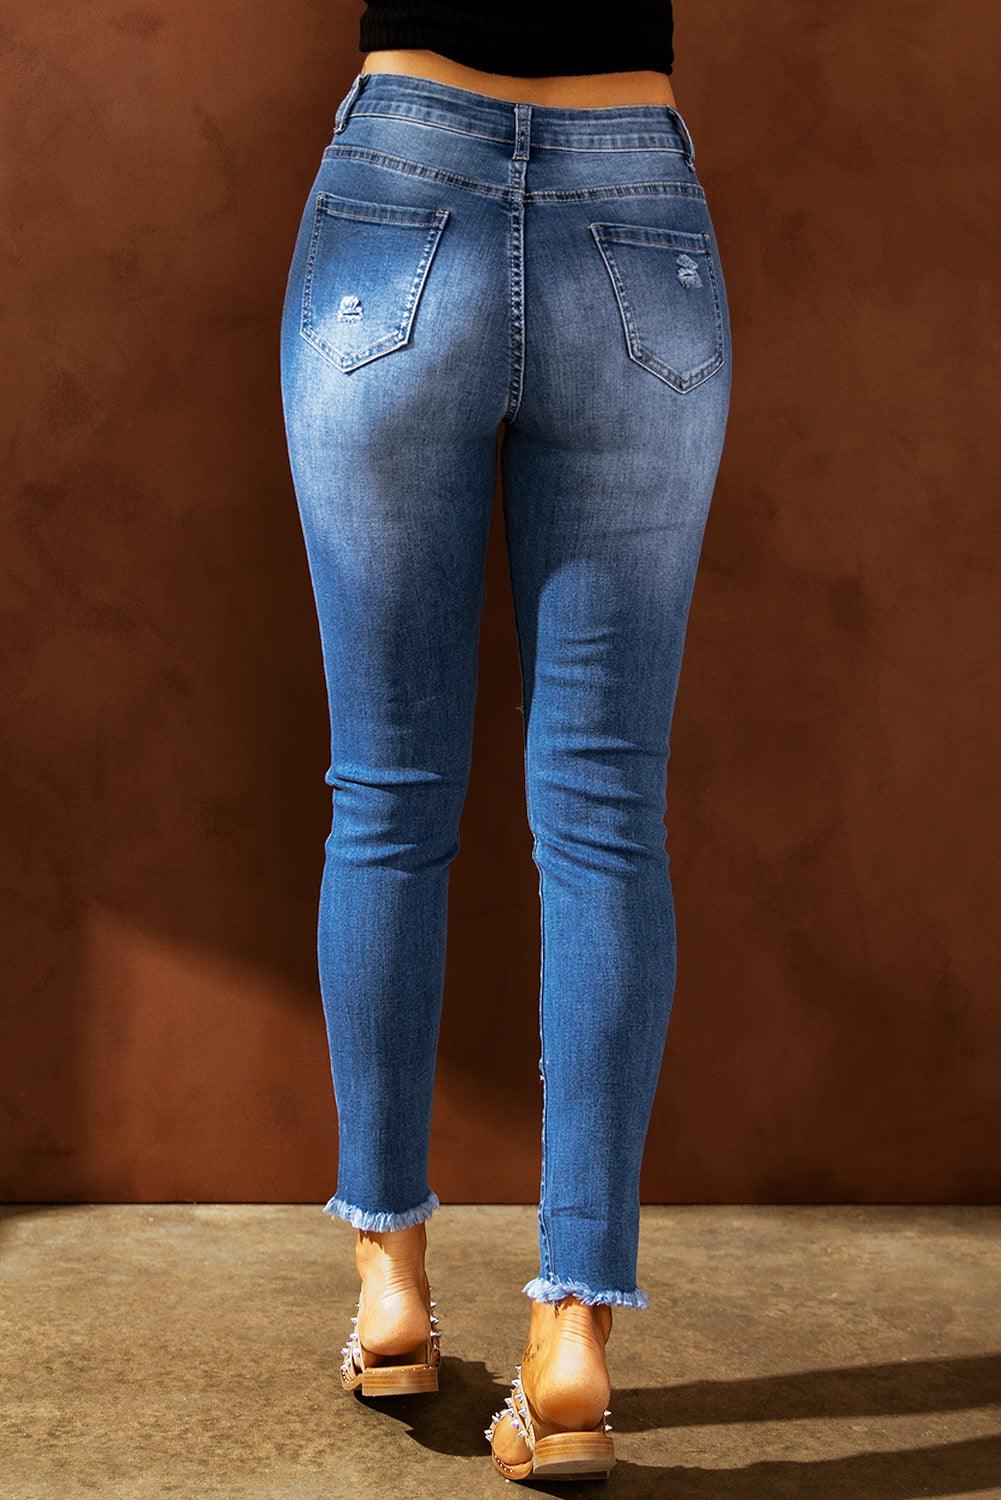 Light Blue High Waist Distressed Skinny Jeans - Vesteeto